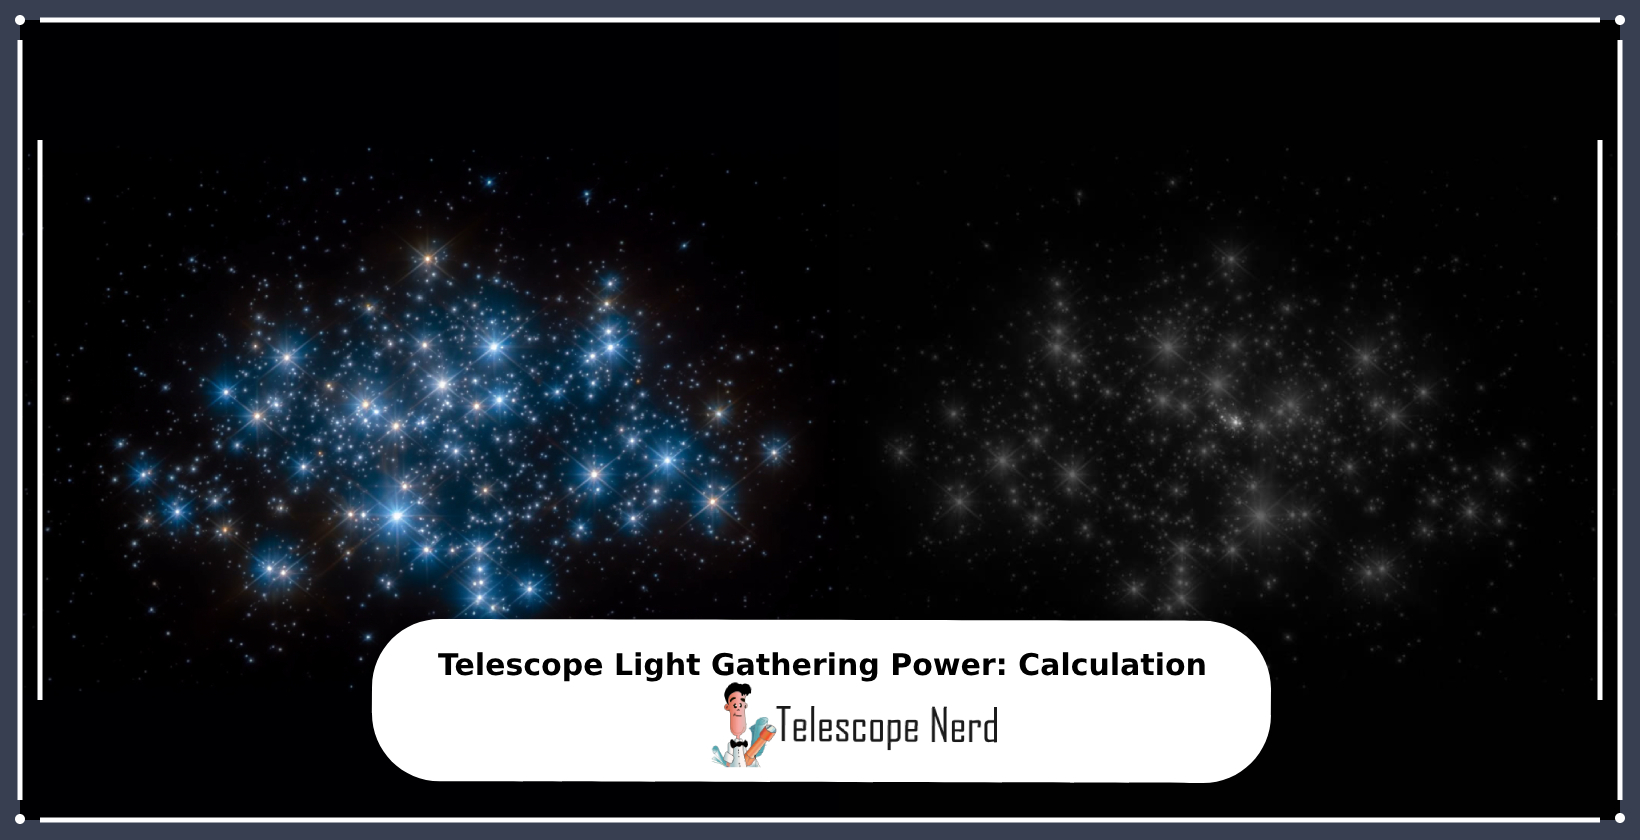 Telescope Light Gathering Power: Calculation